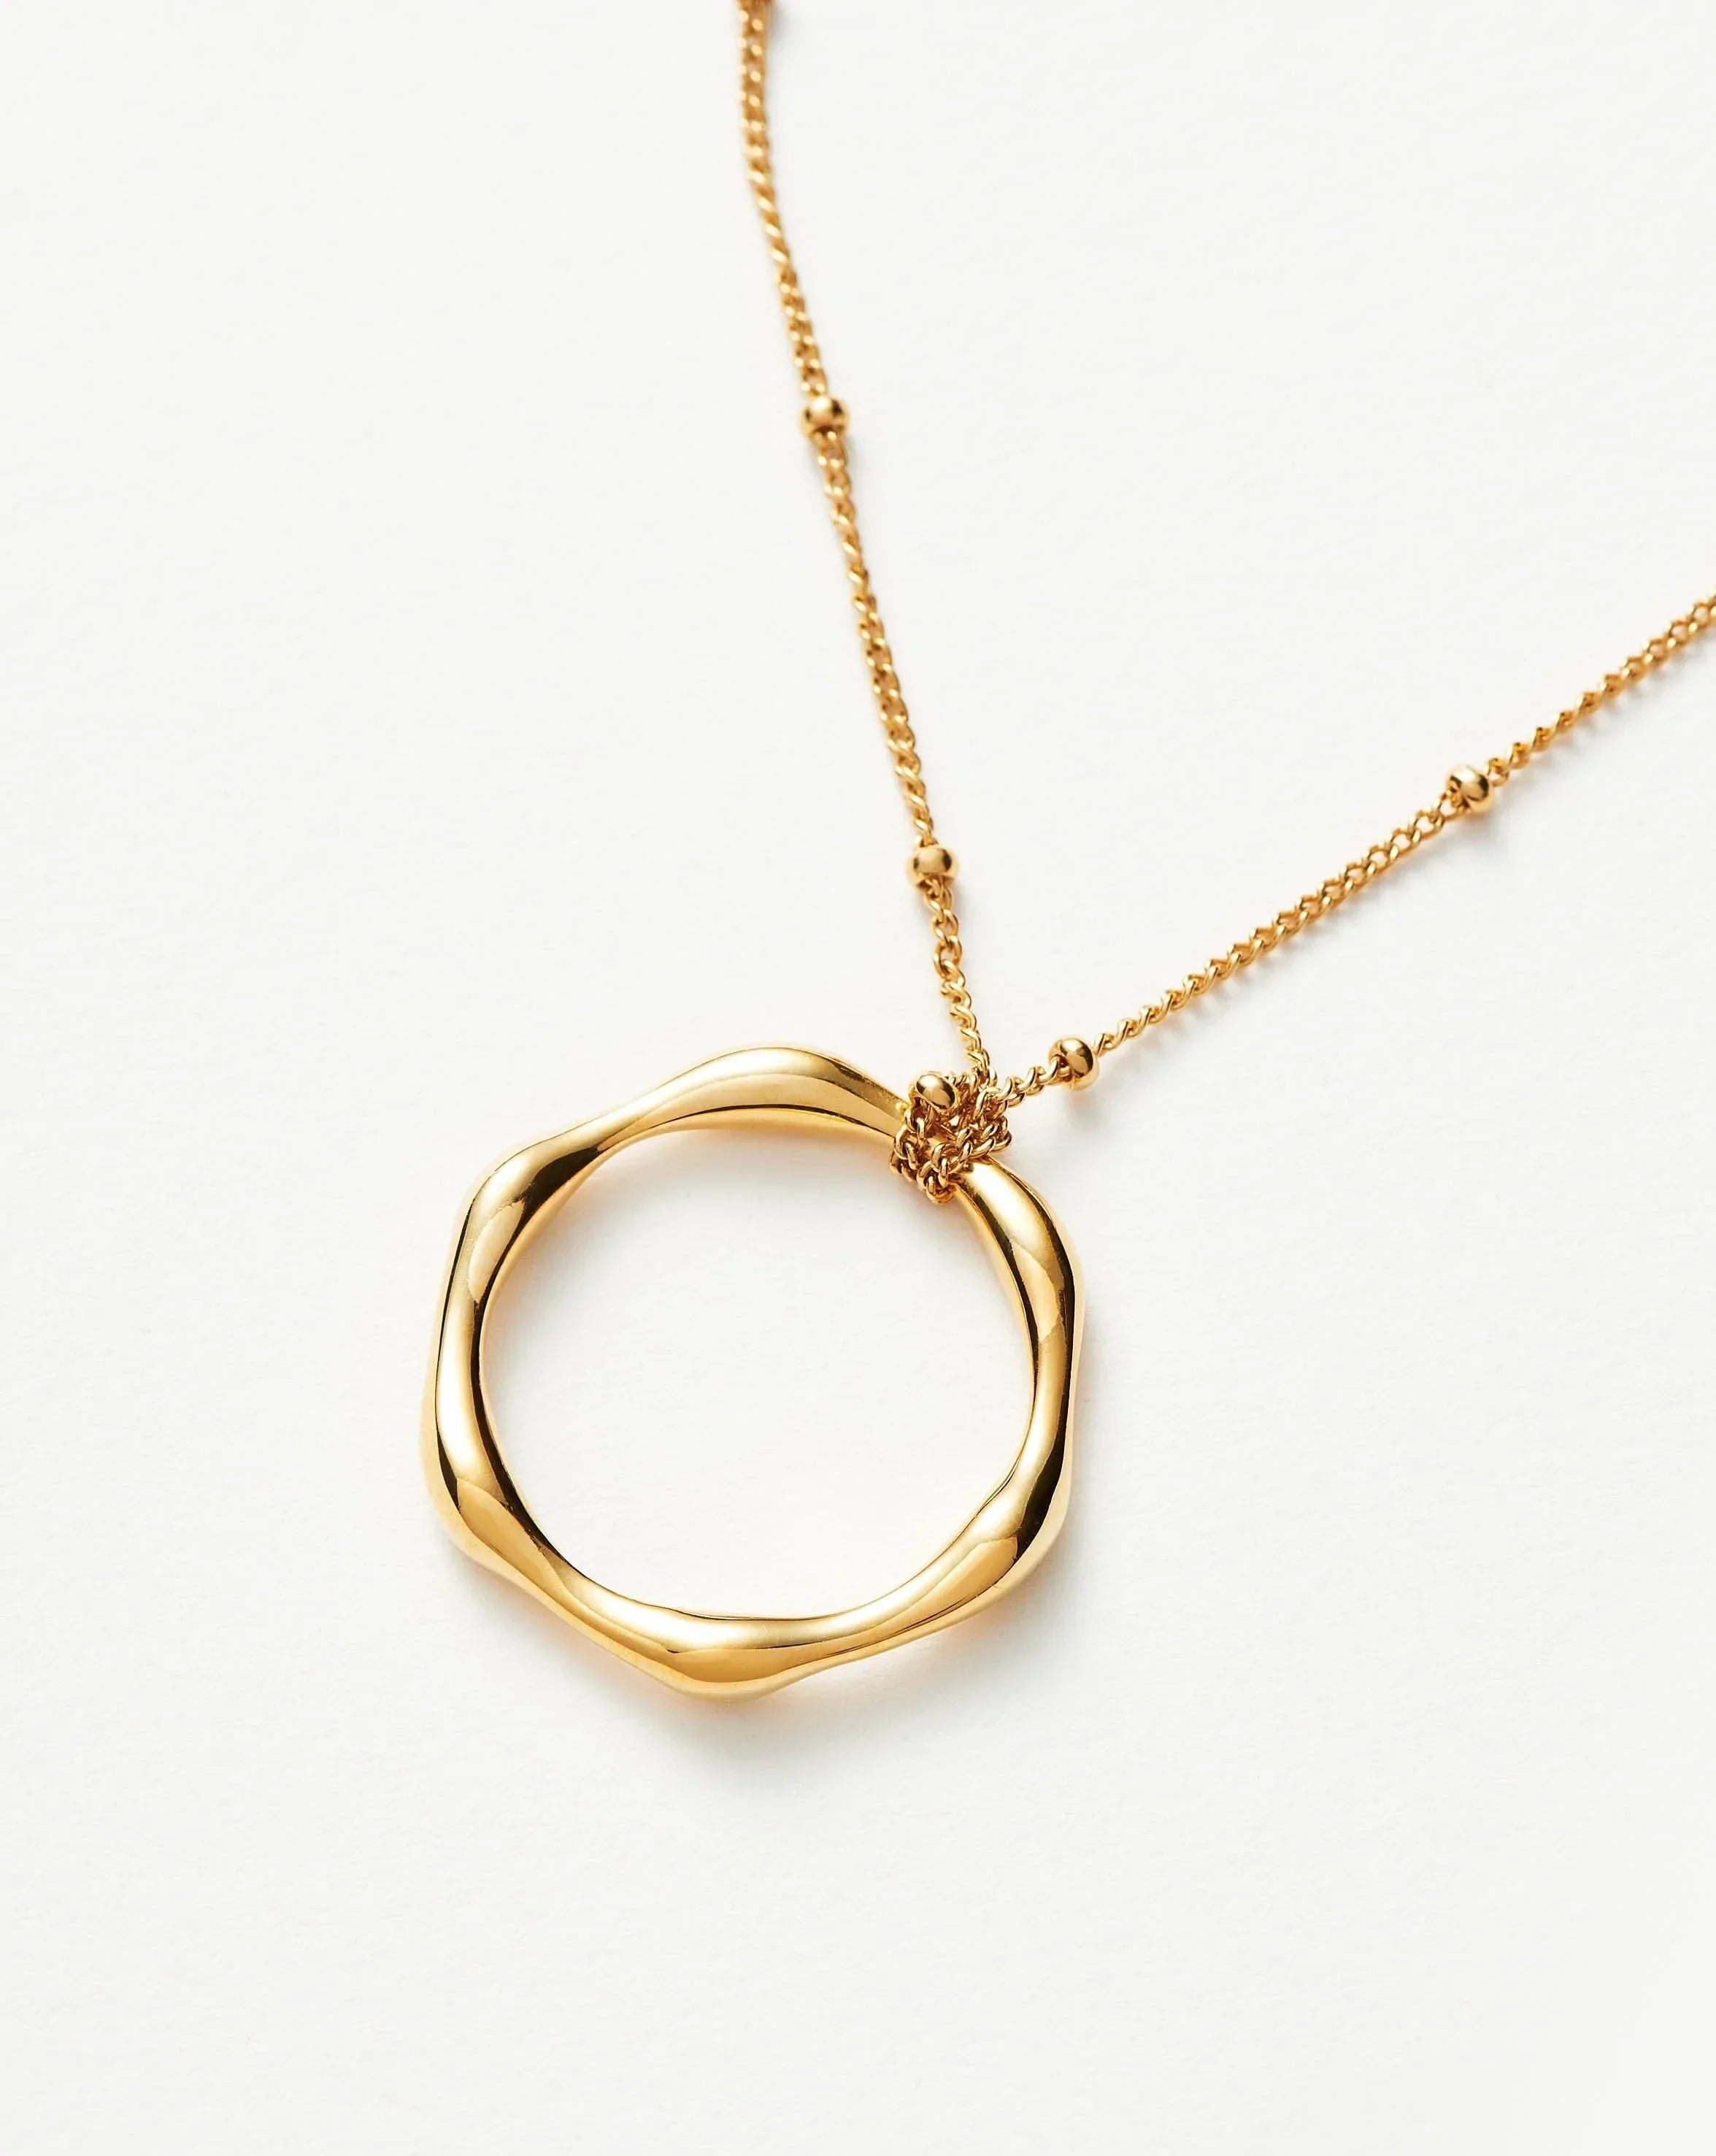 EMMA SILVER LARGE PENDANT NECKLACE FILIGREE | Large pendant necklace, Large  pendant, Filigree necklaces